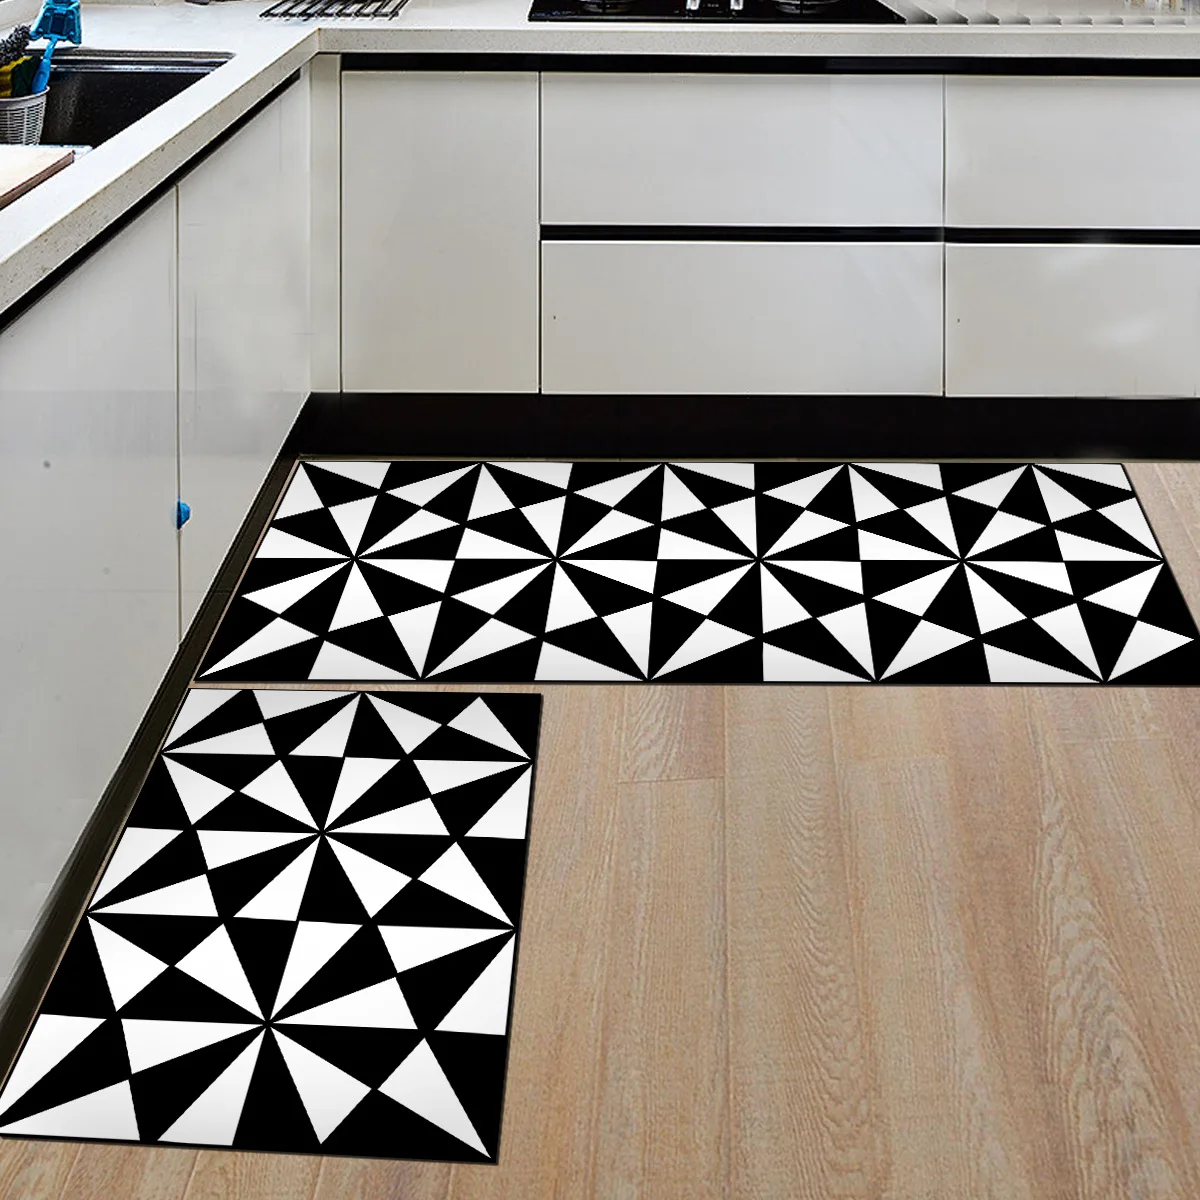 

Zeegle 2pcs/set Black And White Flannel Floor Mats For Kitchen Anti-Slip Kids Bedroom Carpet Entrance/Hallway Area Rug